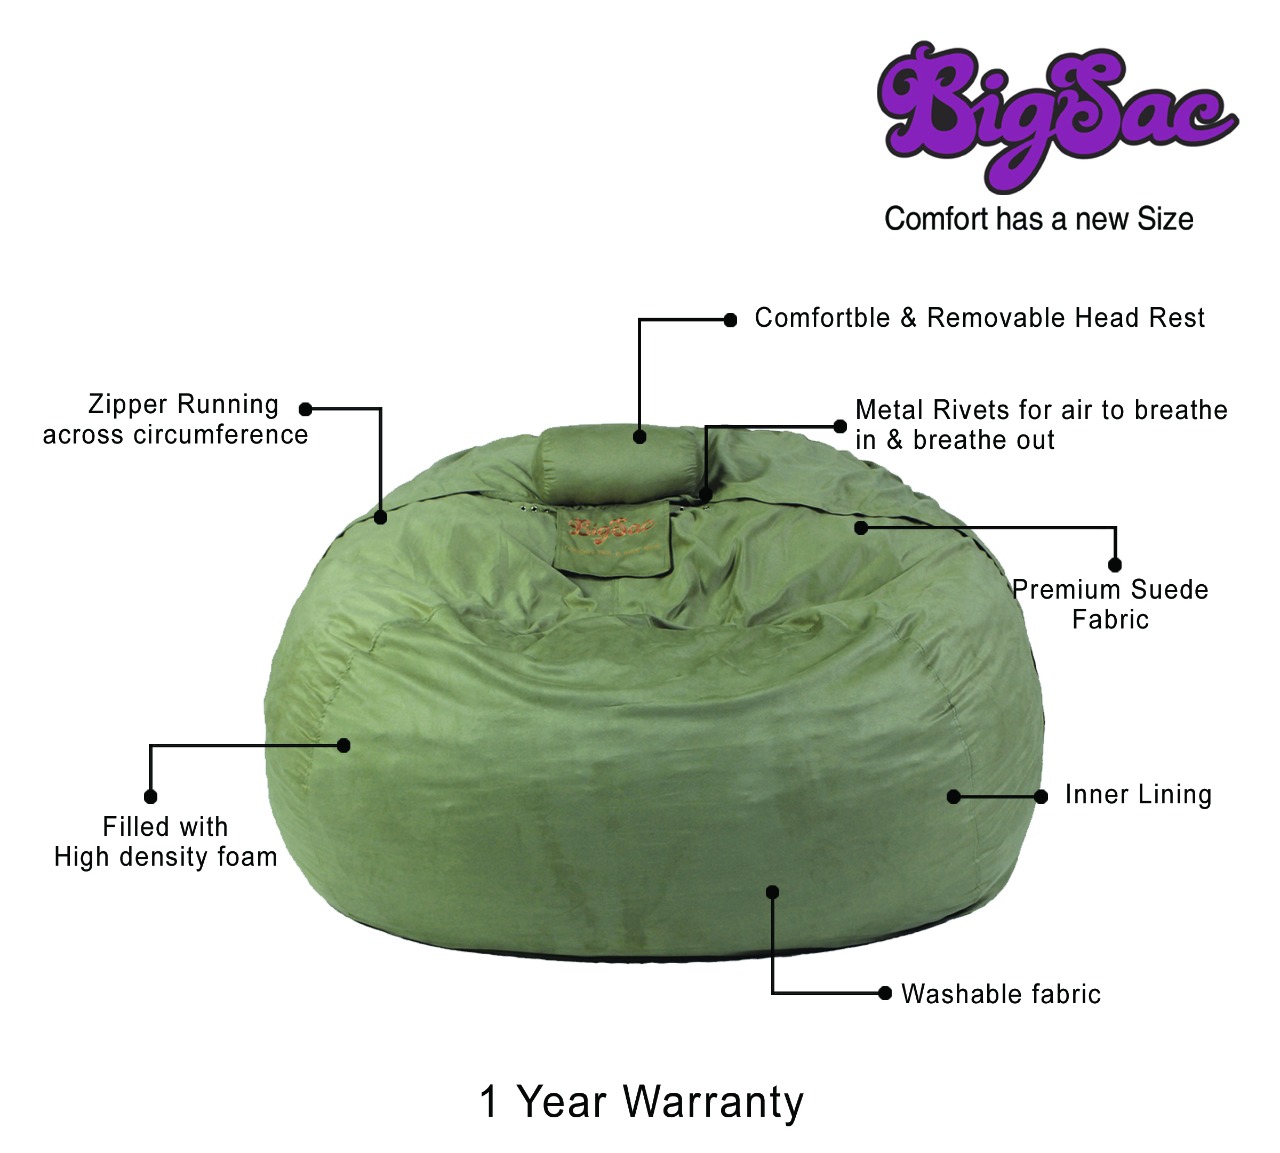 Big Sac 3.5 Feet Love Sac Premium Suede Fabric Filled Light Green Color - 5 Years Warranty      